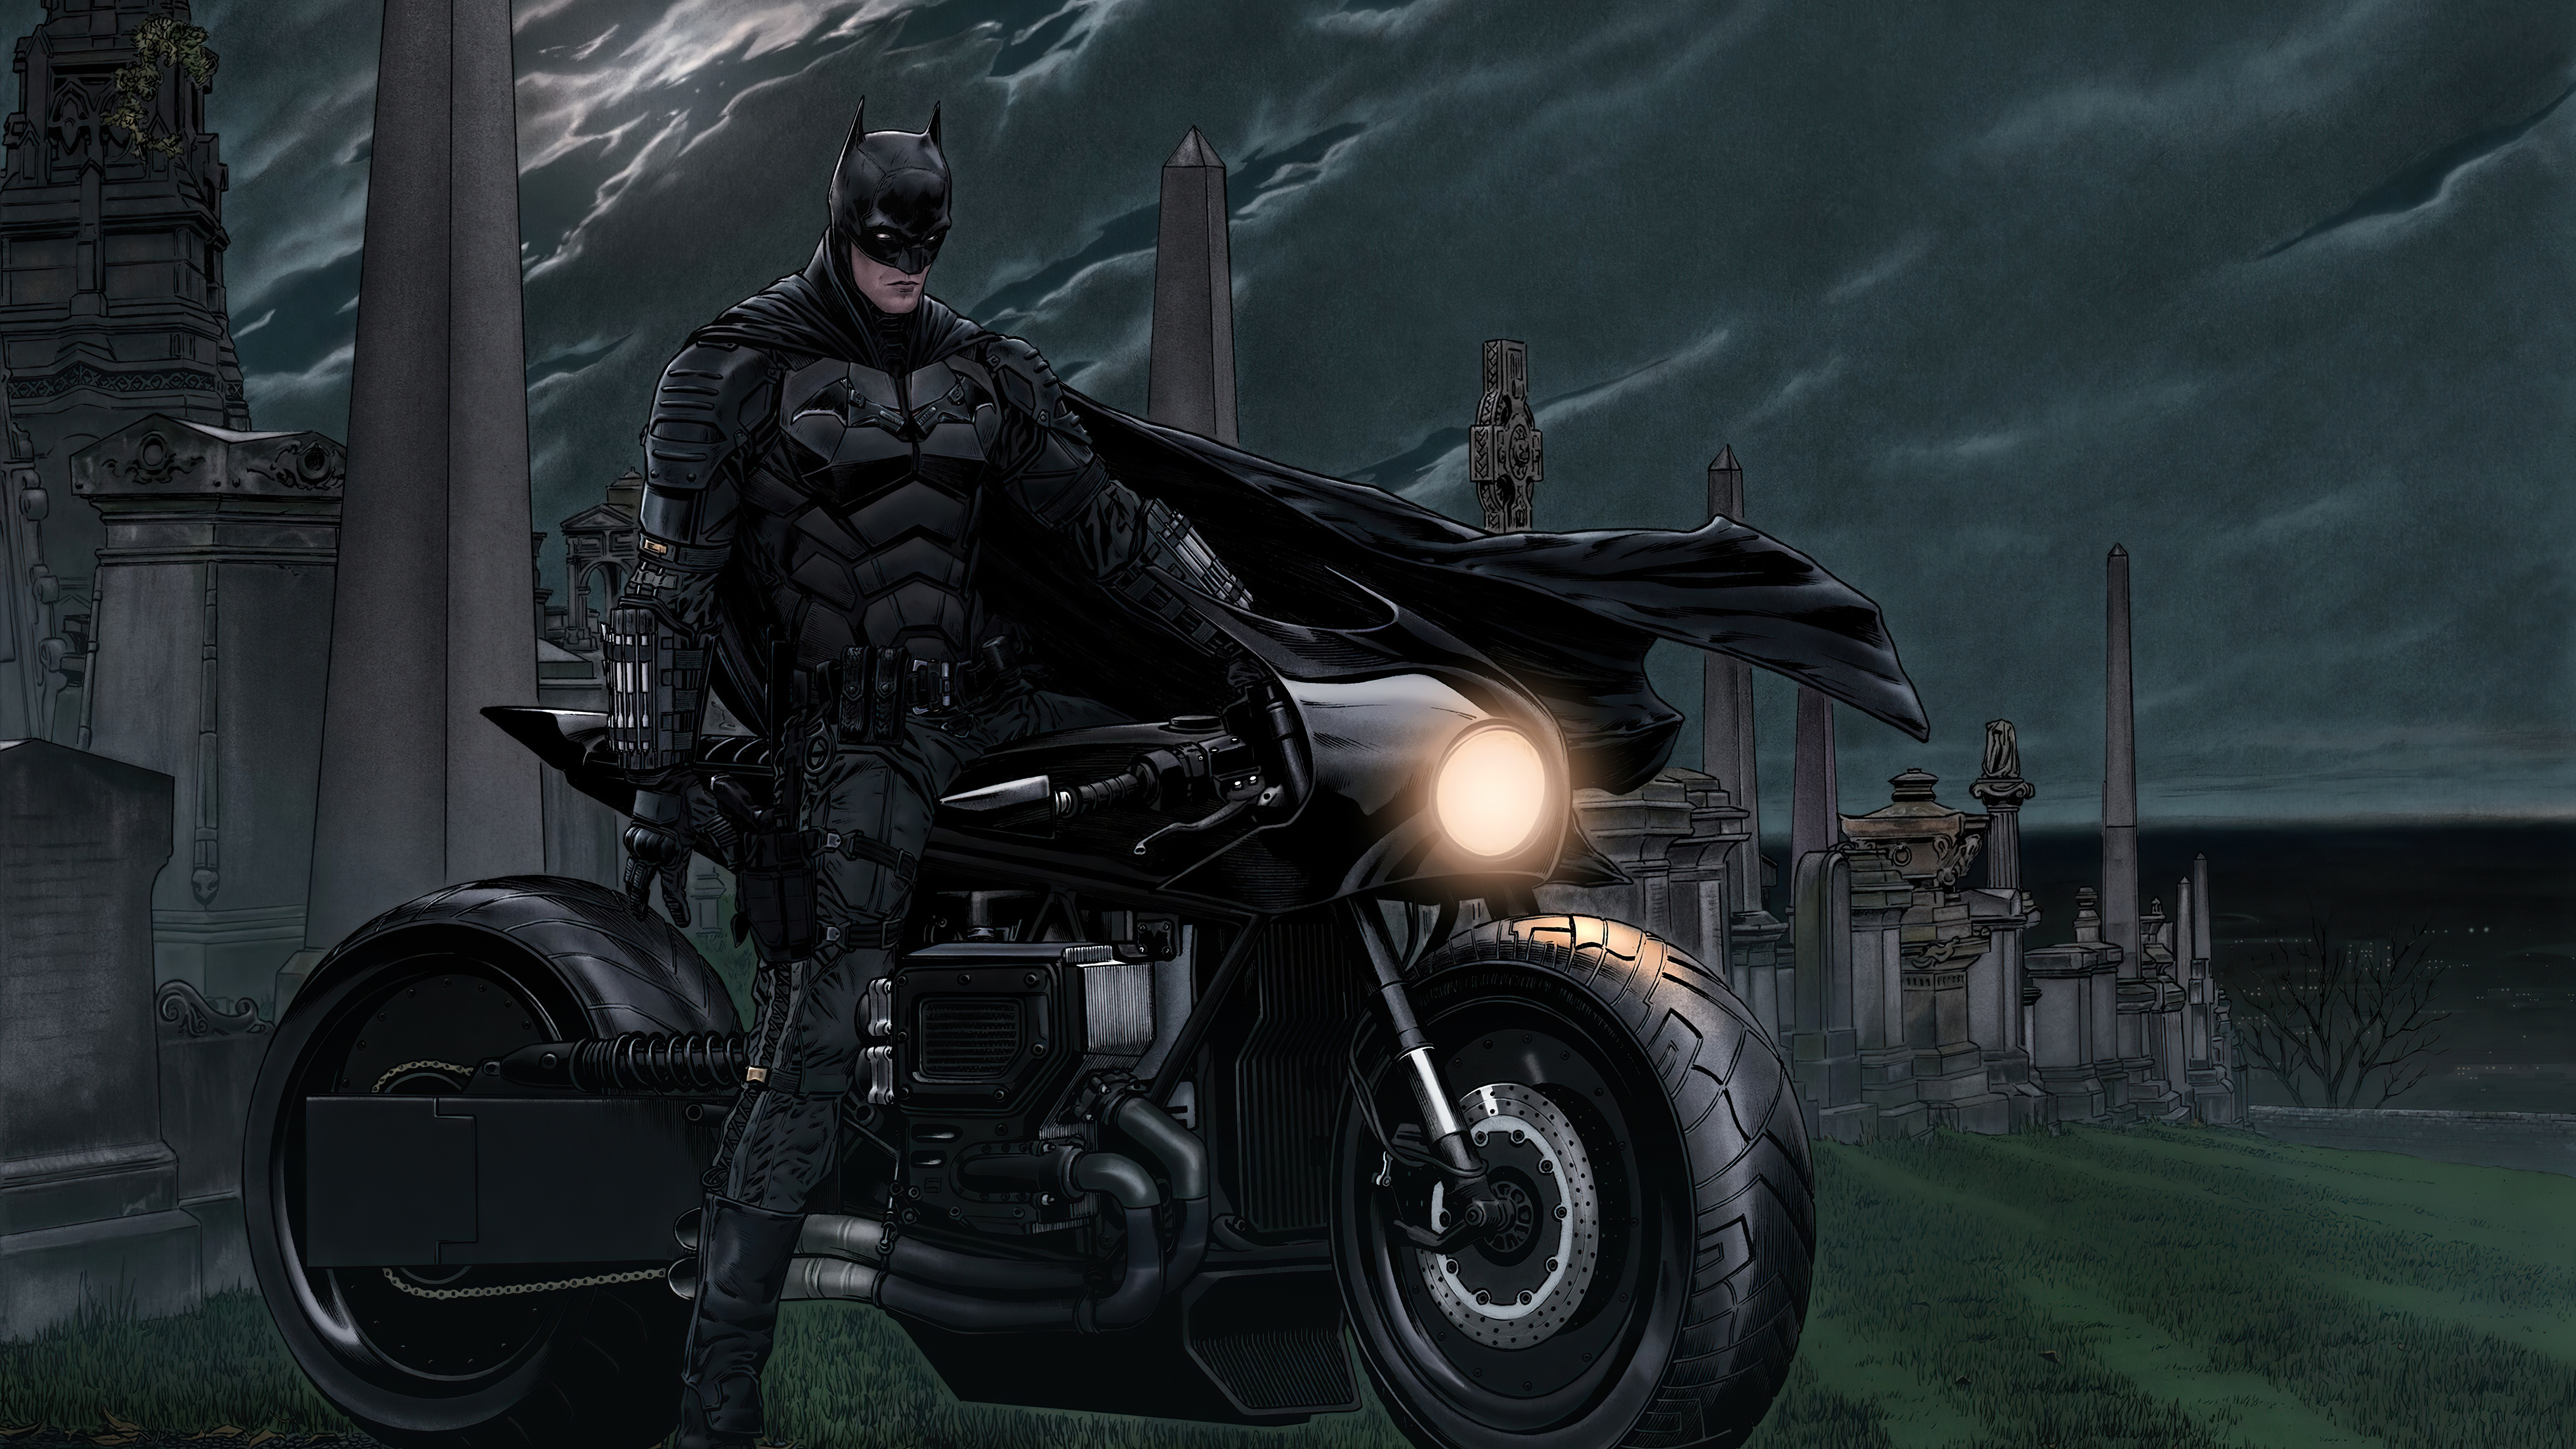 Batman 4k Motorcycle Art Wallpaper, HD Superheroes 4K Wallpapers, Images,  Photos and Background - Wallpapers Den